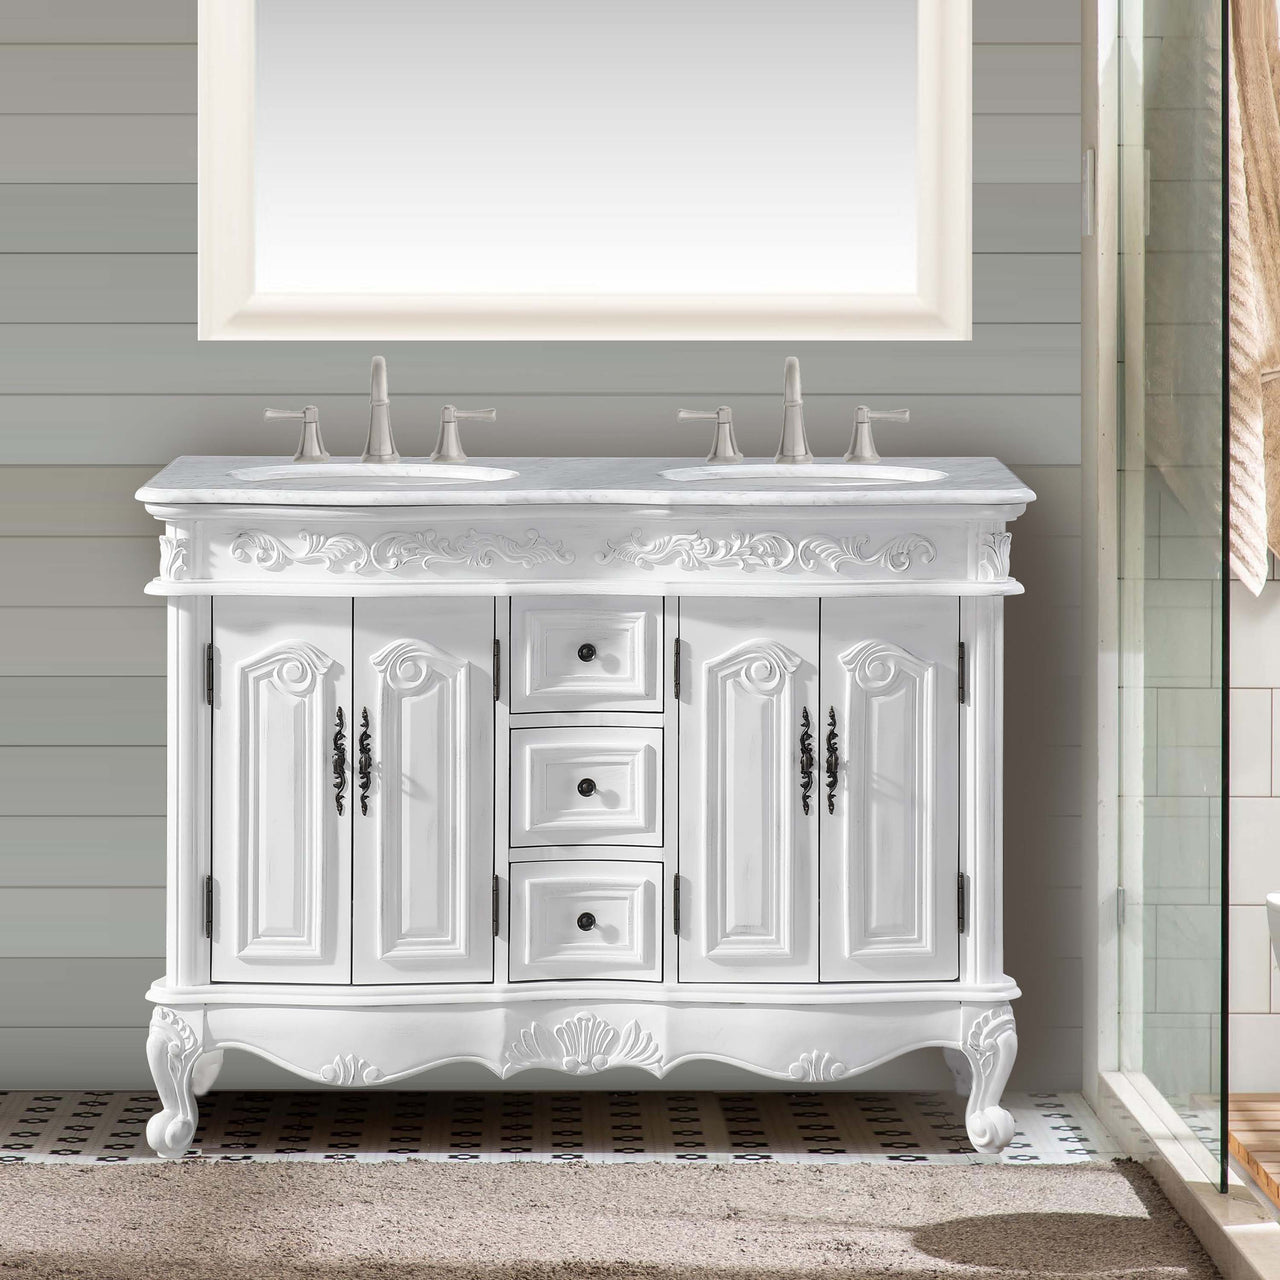 Silkroad 48" Double Sink Cabinet - Carrara White Top, Undermount White Ceramic Sinks (3-hole)